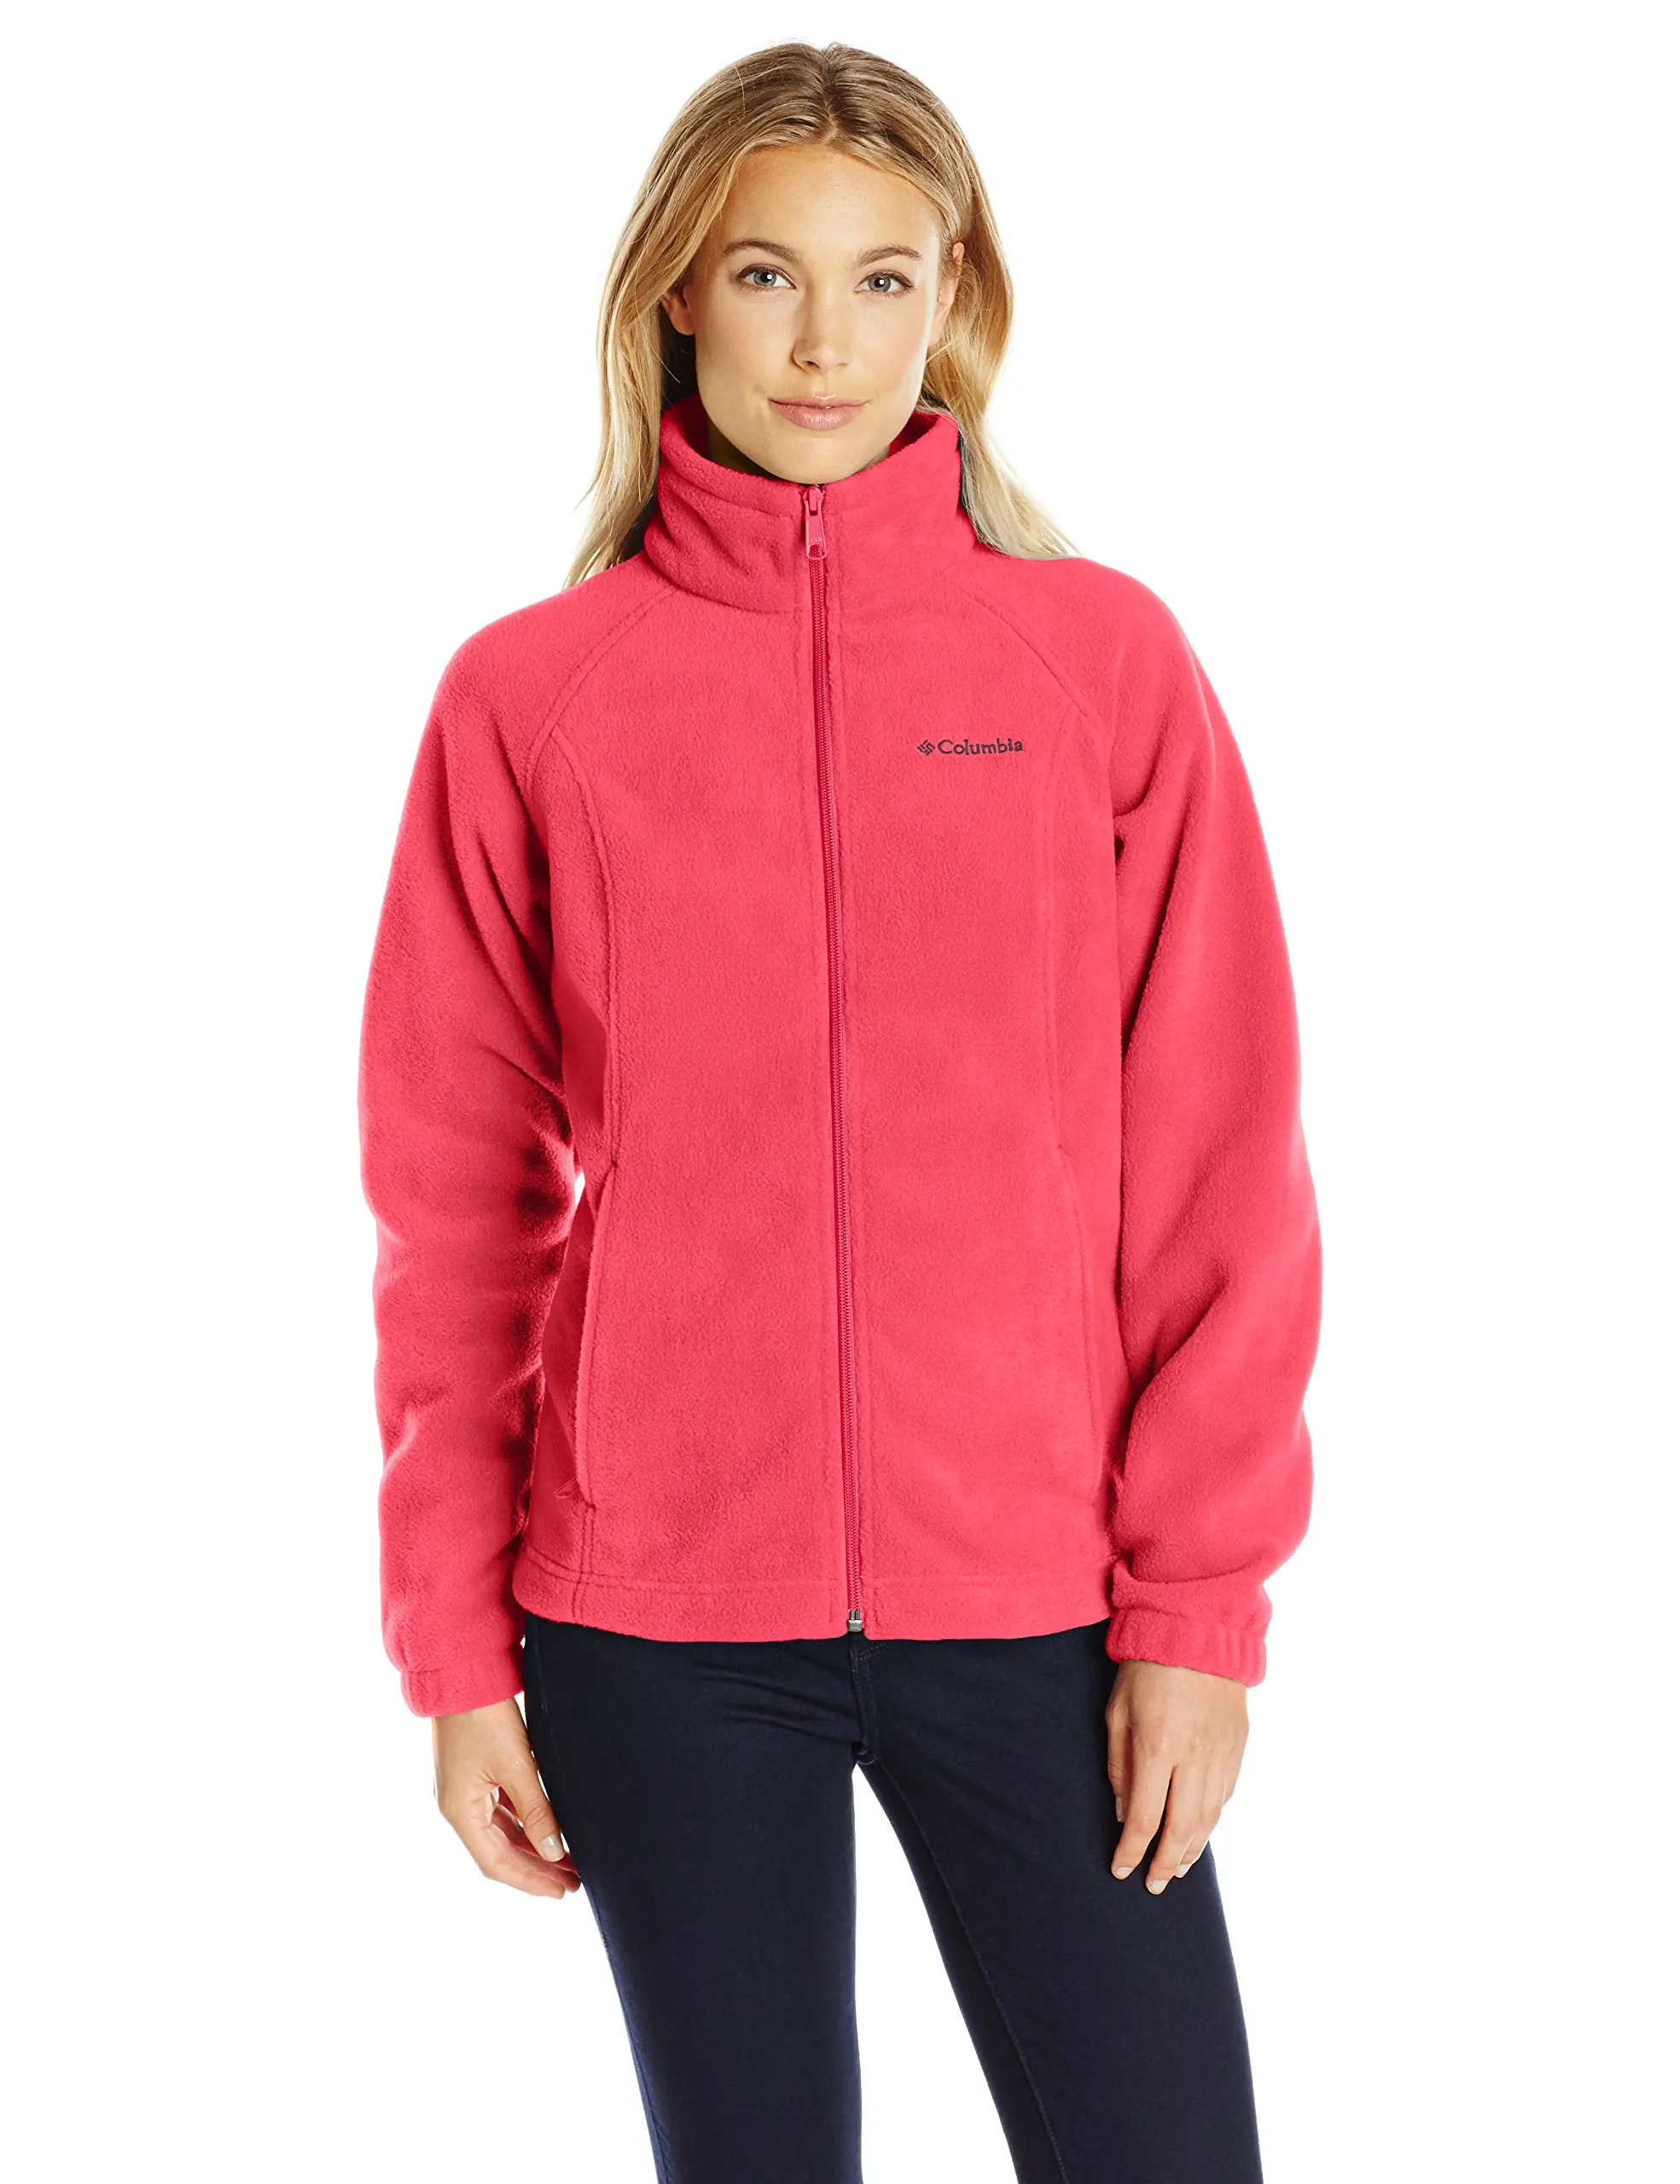 Snowboarding jacket plus size petite women — pic 6